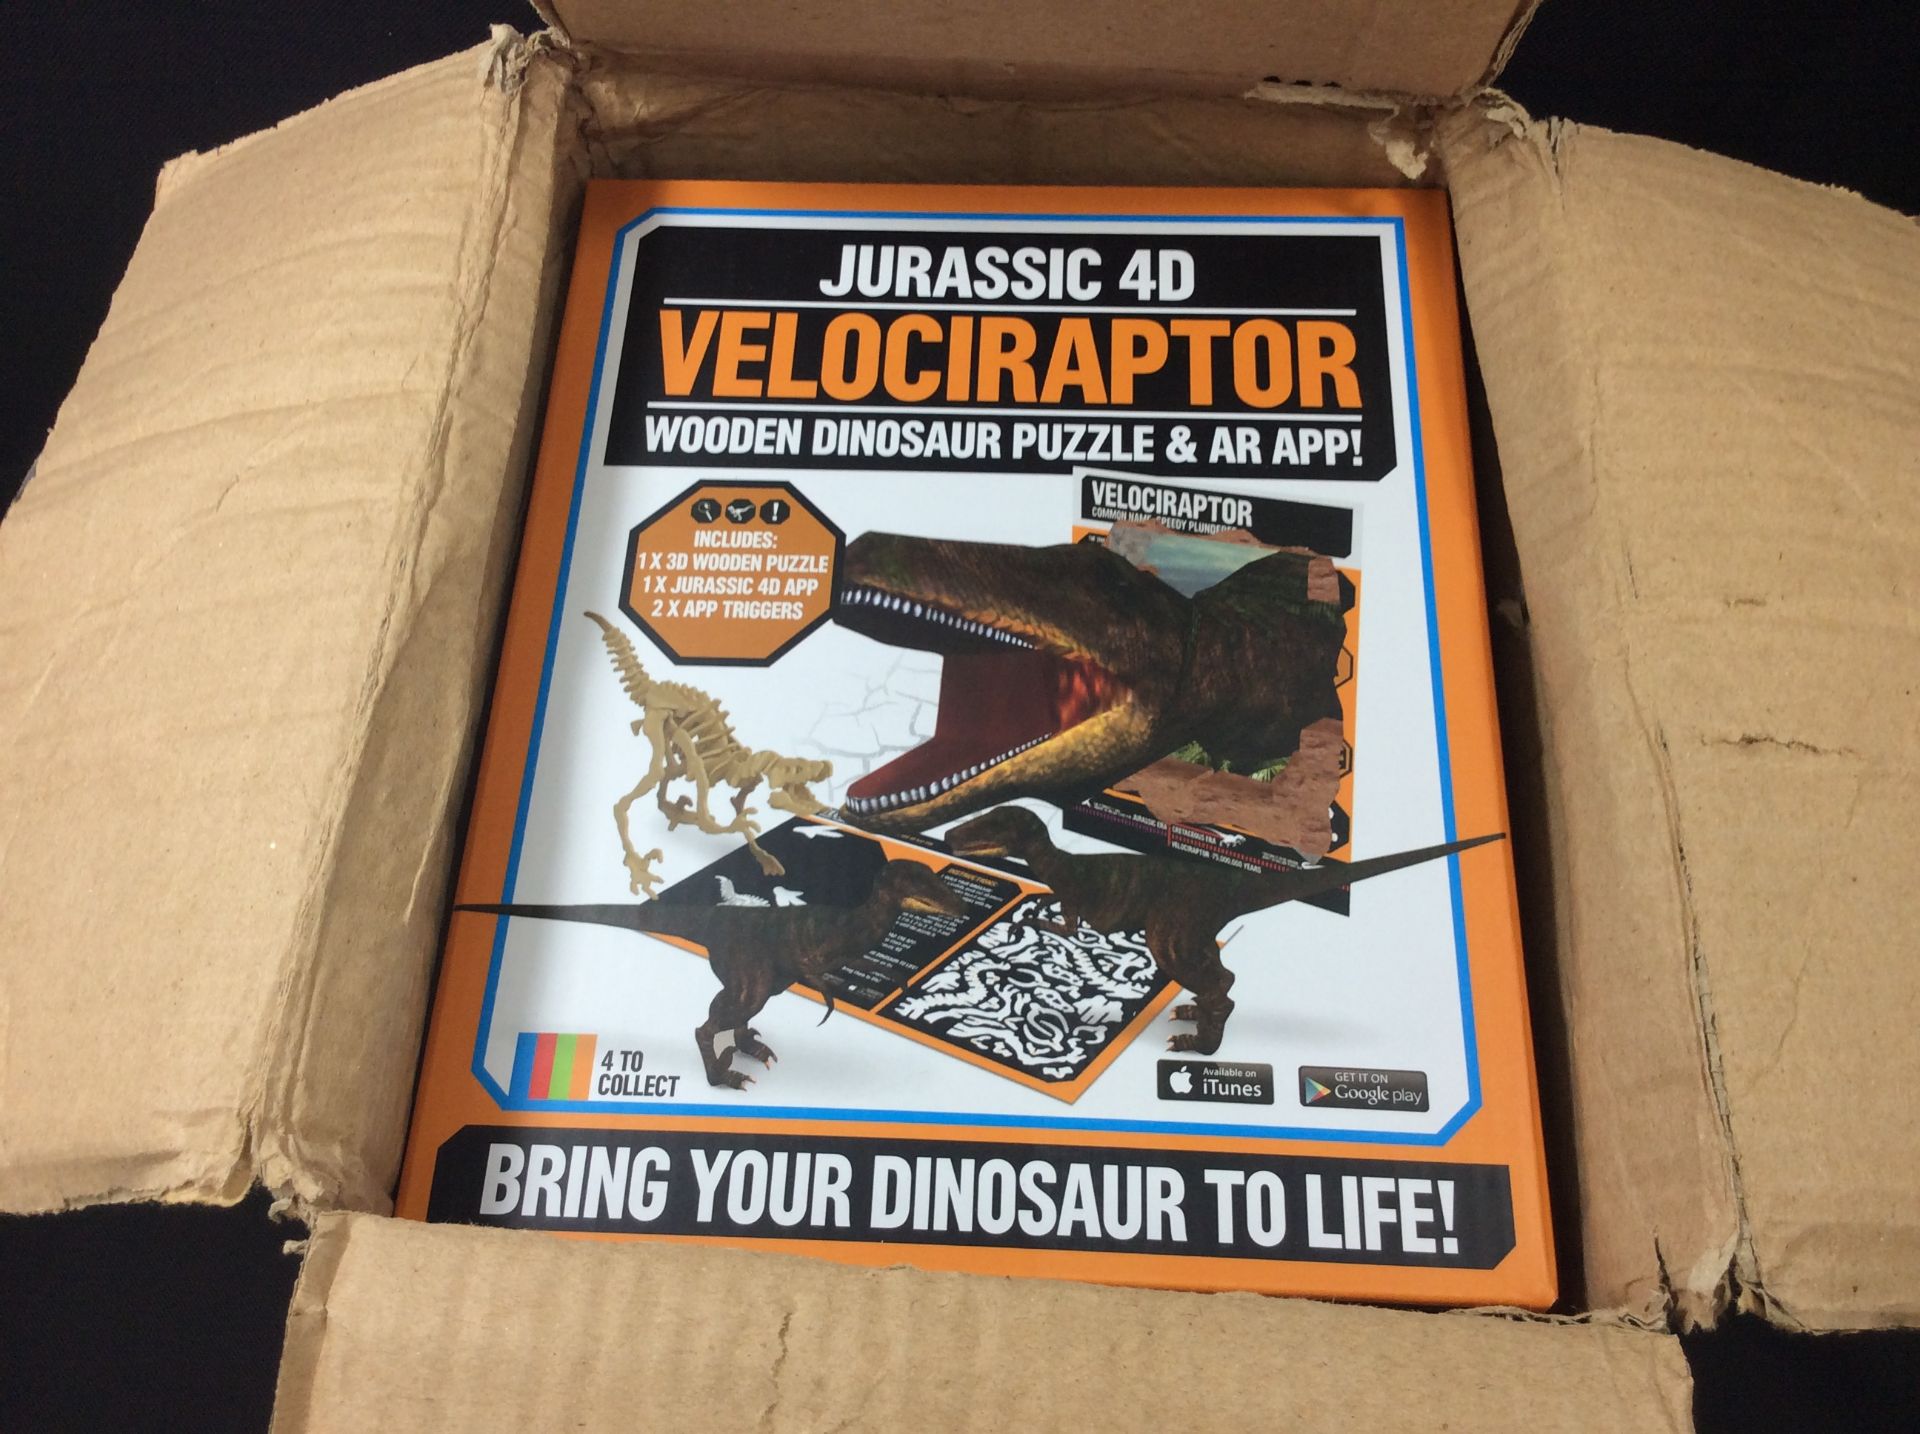 Box of jurassic 4d velociraptor puzzles